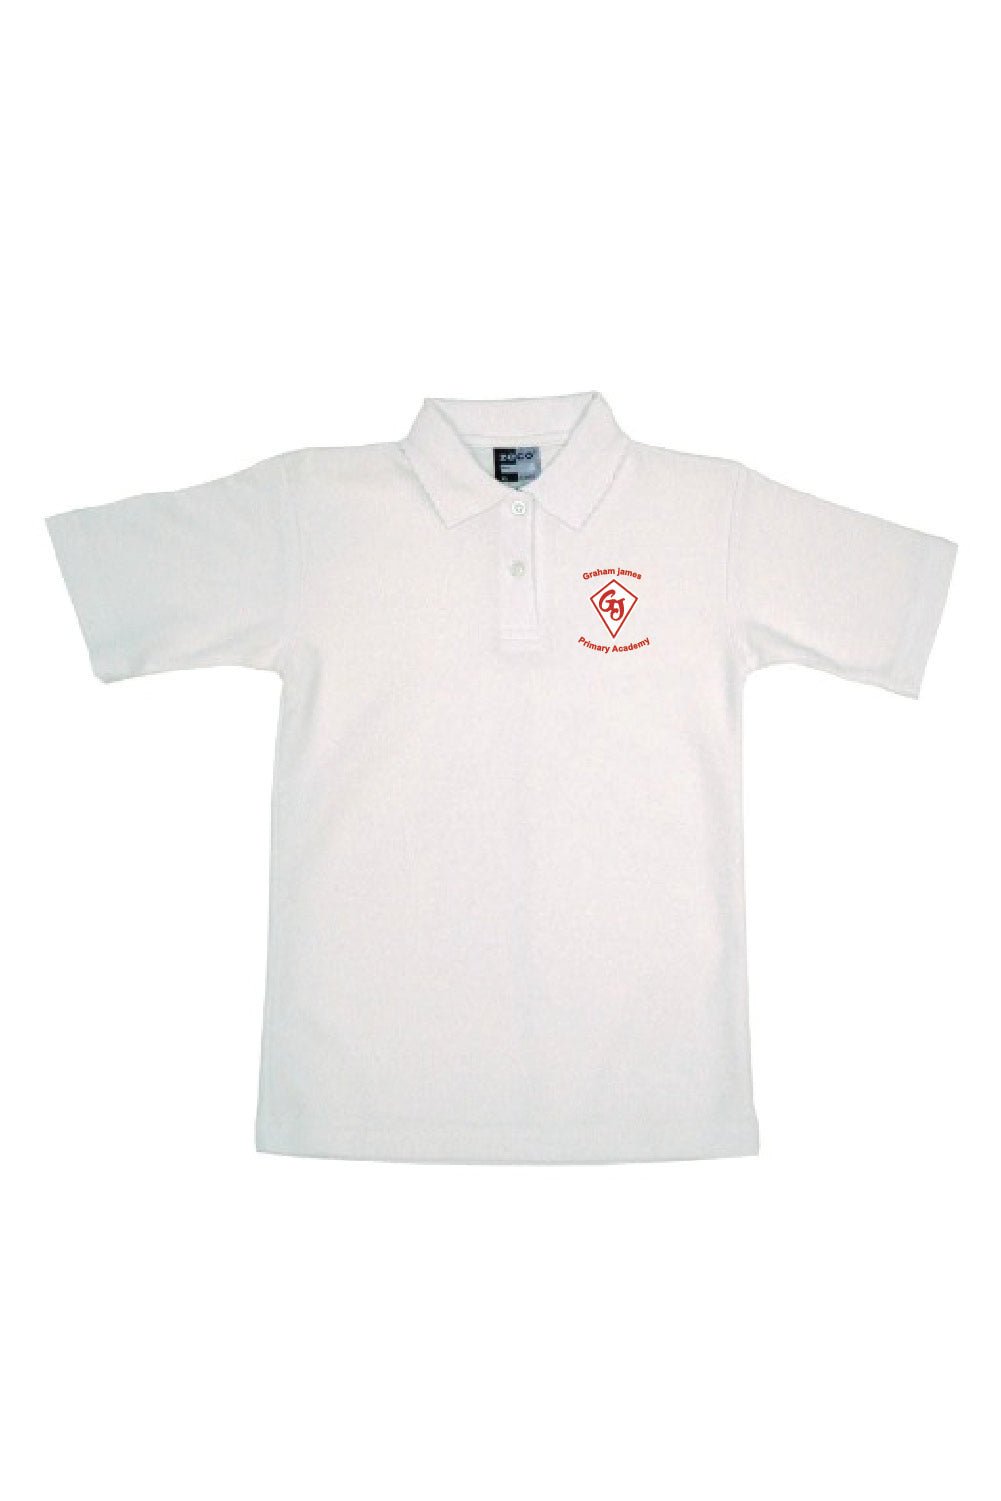 Graham James Frilly School Polo - Uniformwise Schoolwear